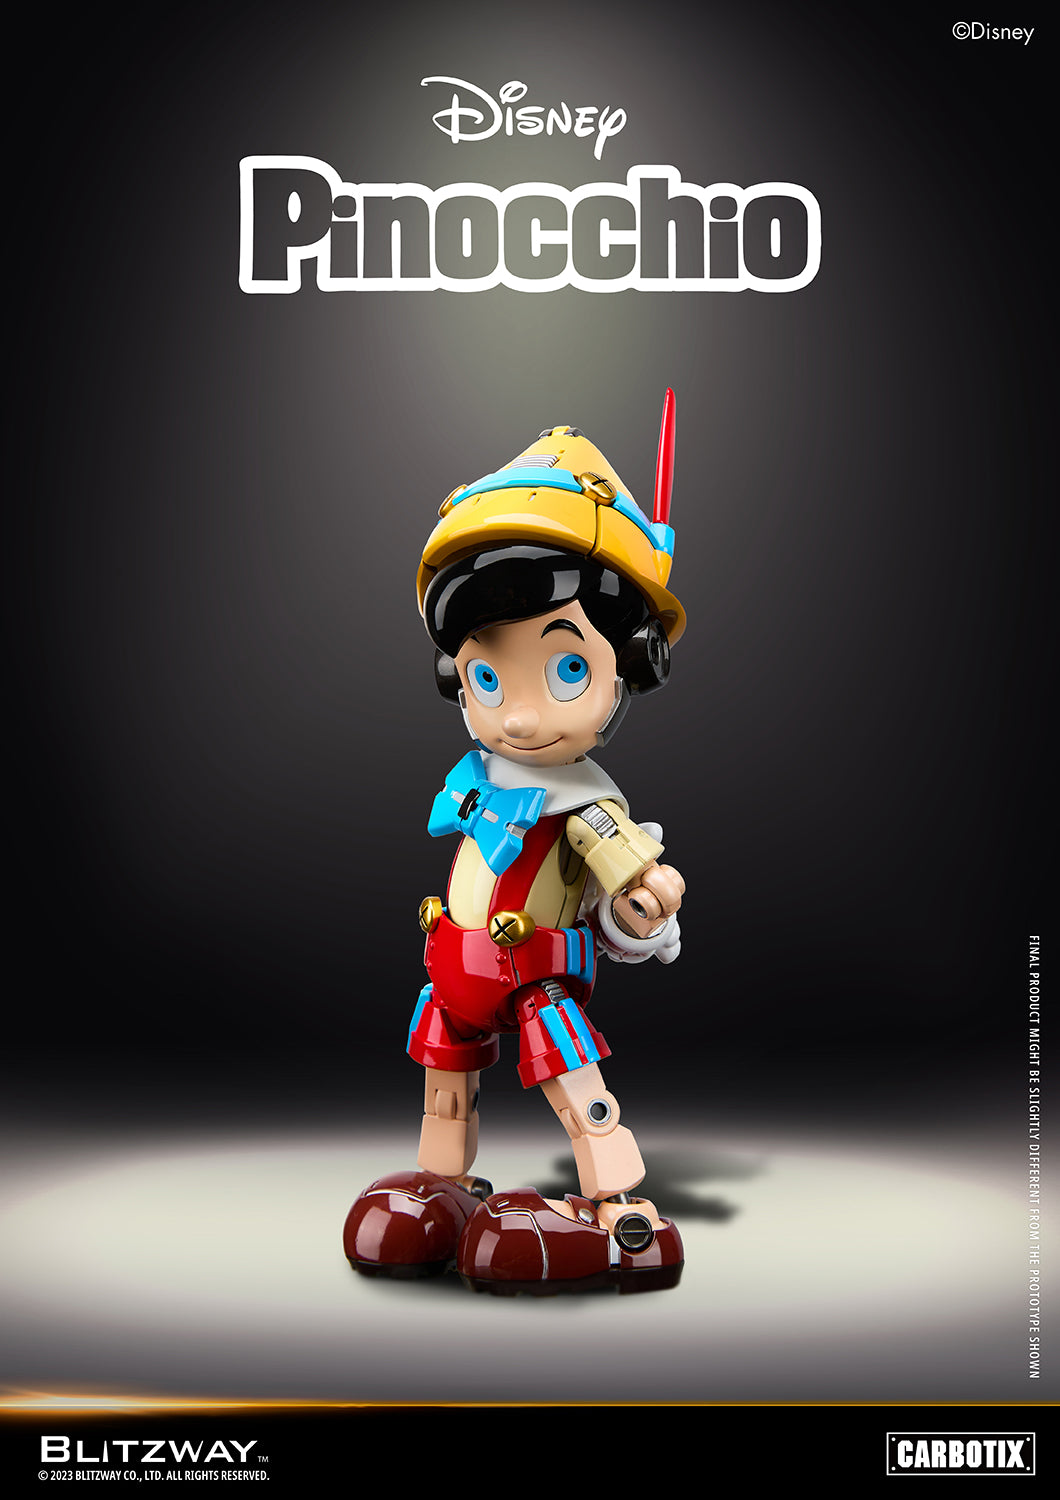 Blitzway - Carbotix - Disney's Pinocchio